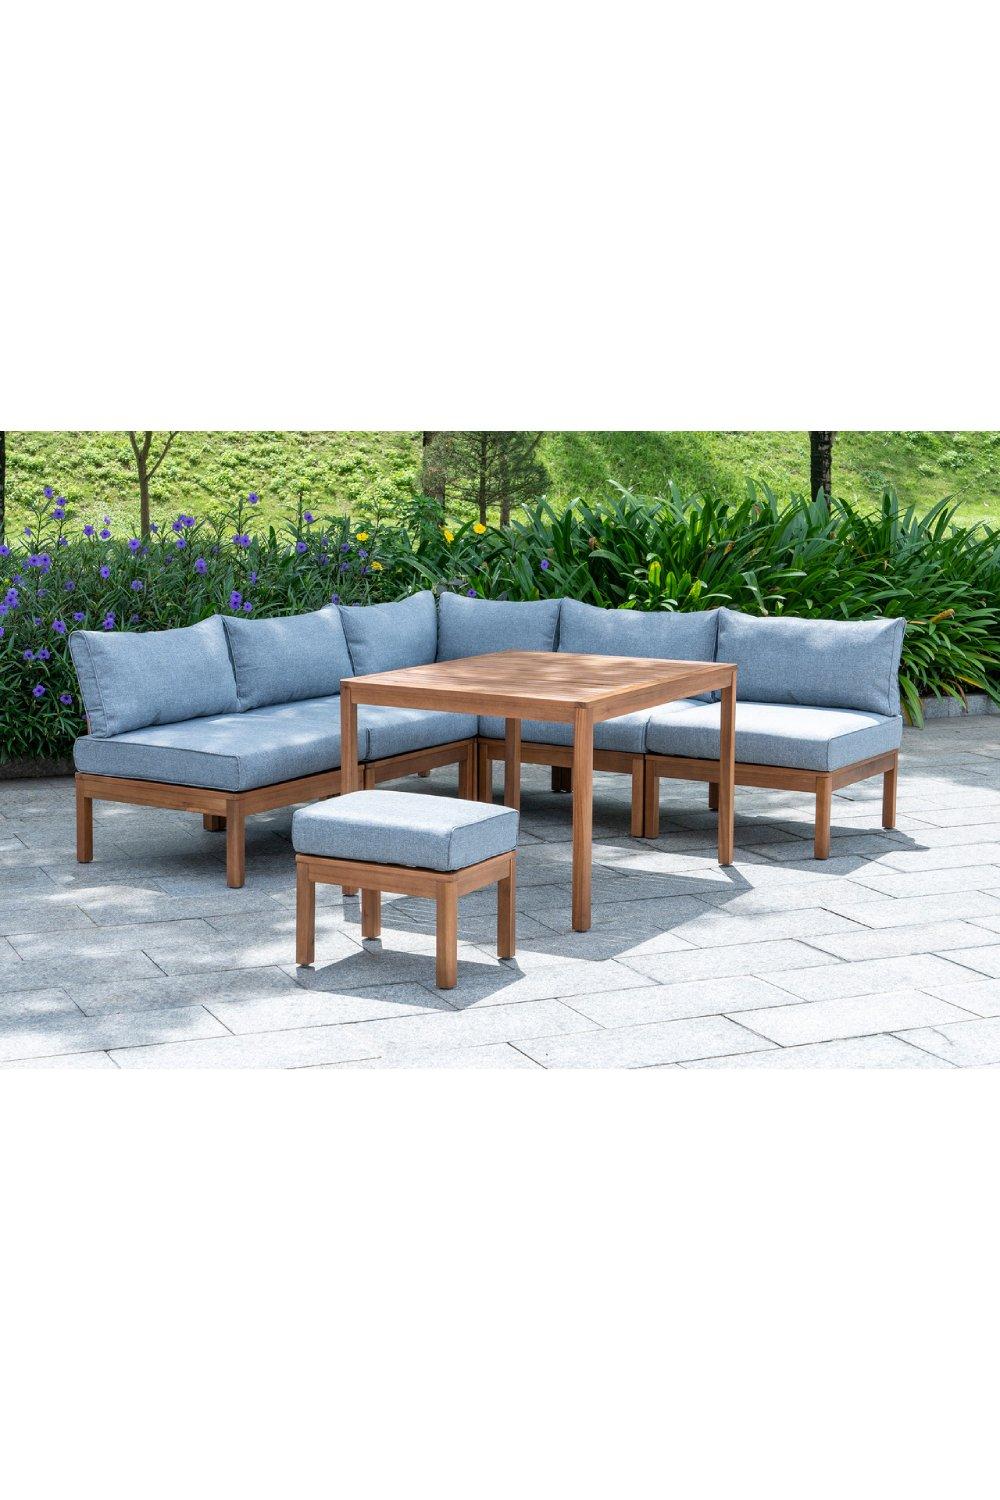 Cali - Wooden Garden Lounge Set - 6 Seats